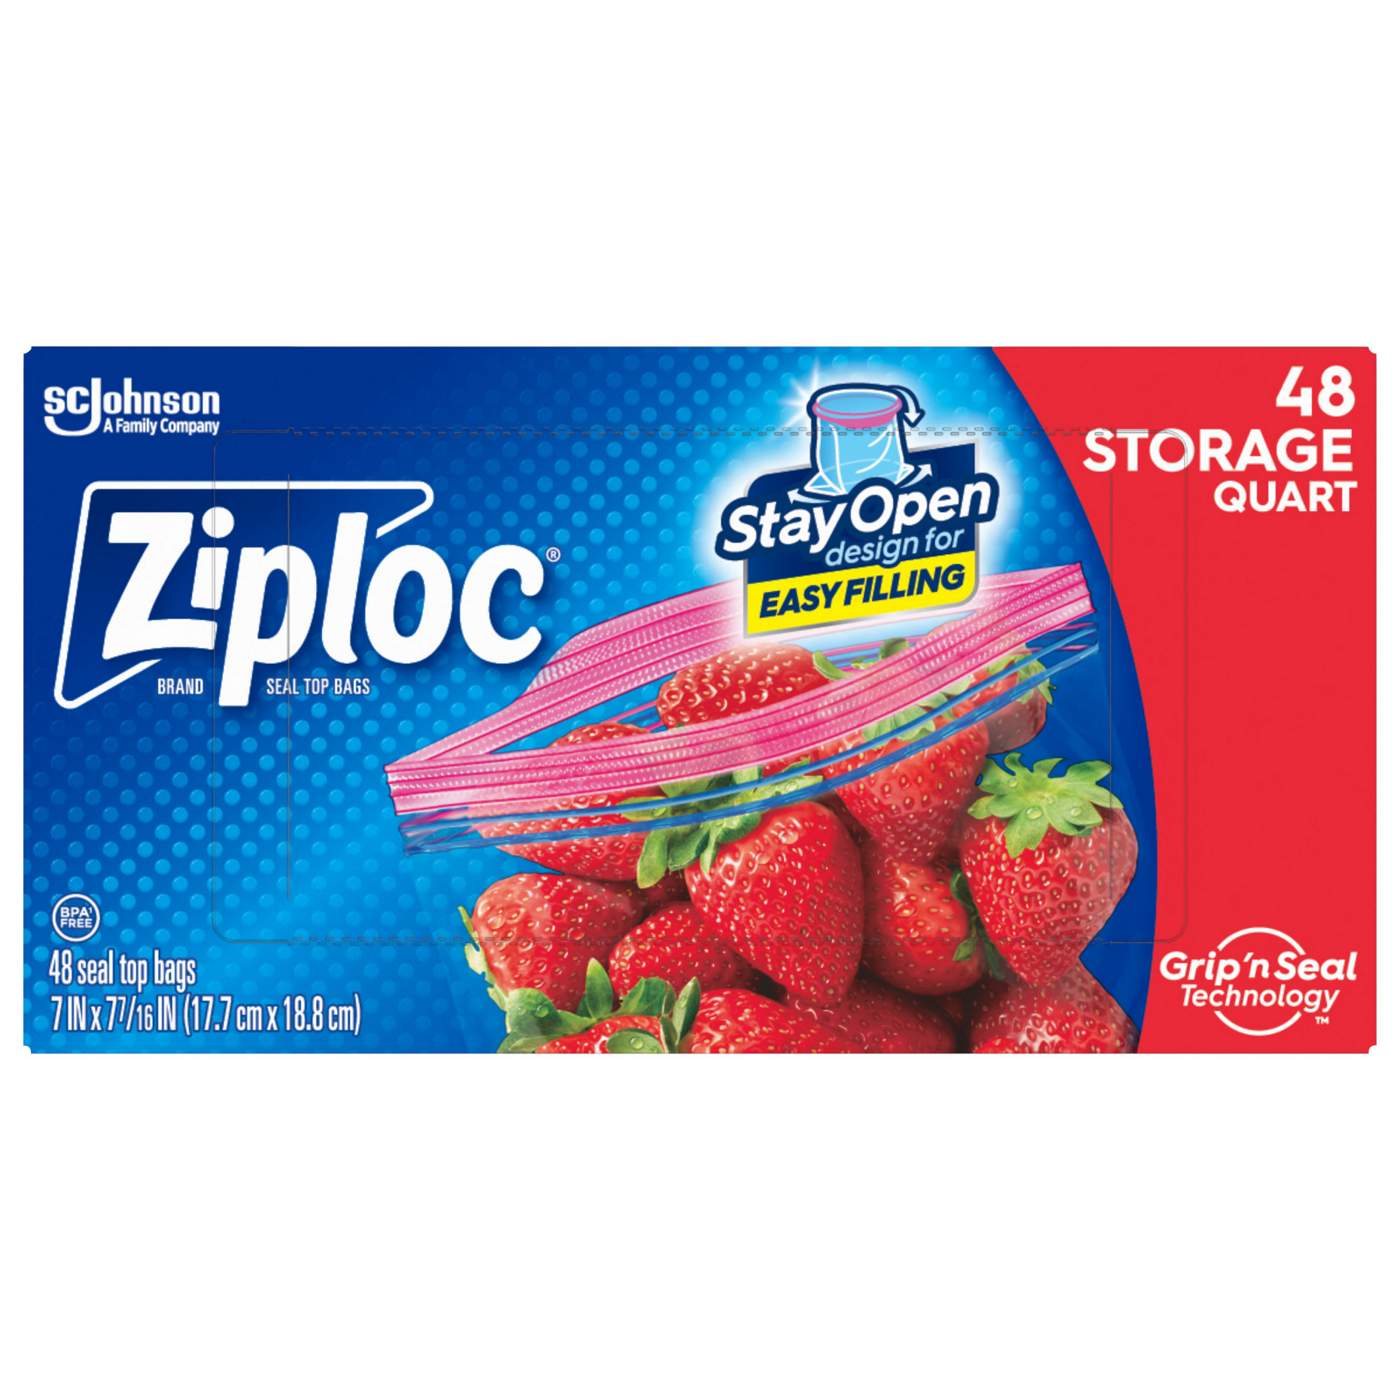 Ziploc 1 Qt. Double Zipper Food Storage Bag (24-Count)